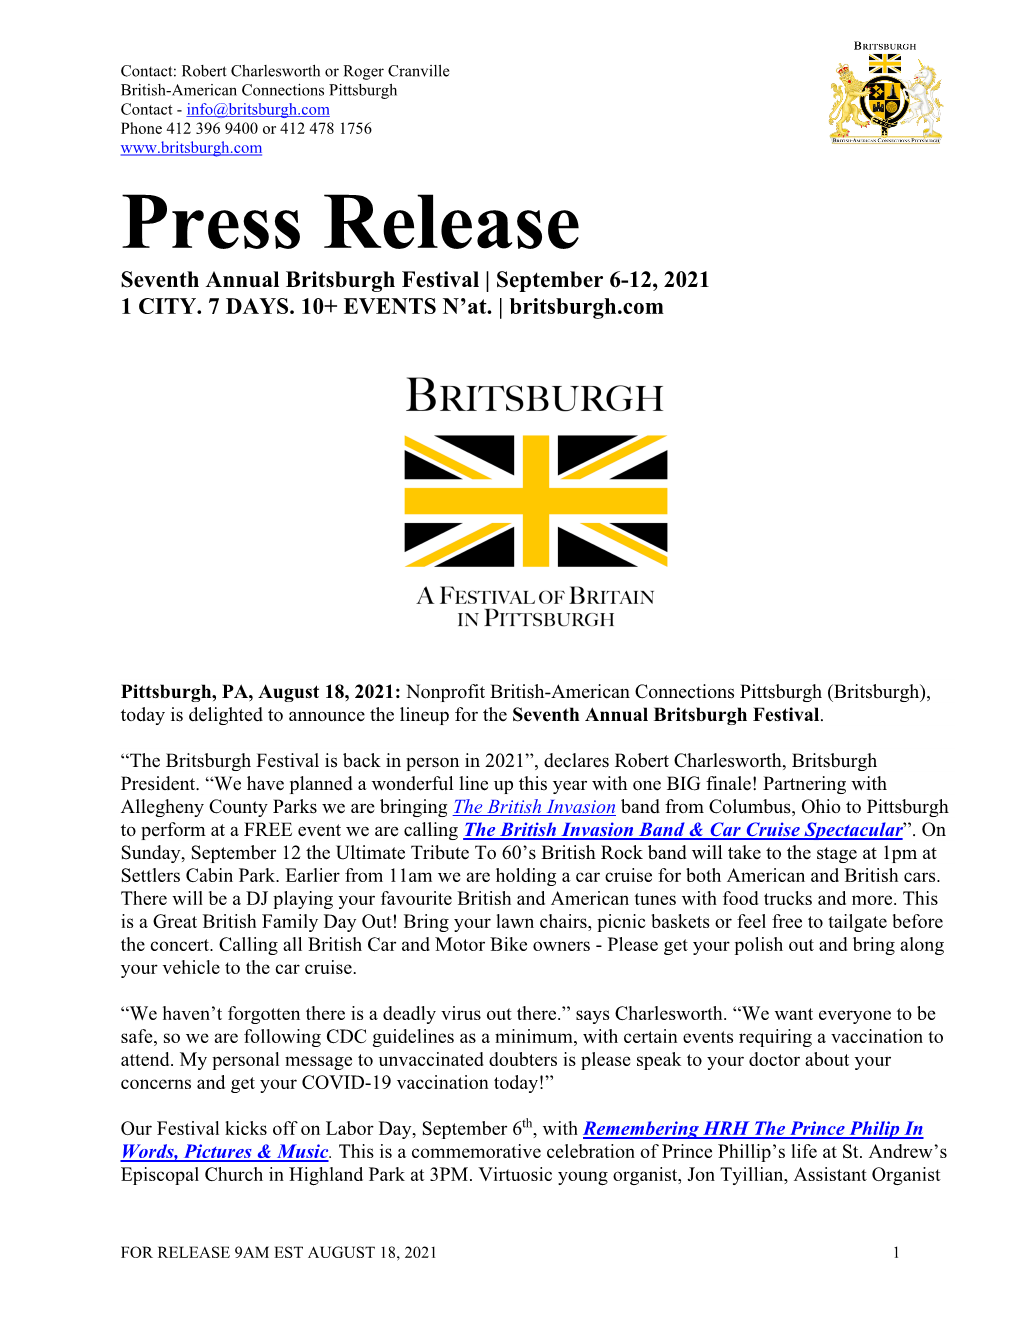 Press Release Seventh Annual Britsburgh Festival | September 6-12, 2021 1 CITY